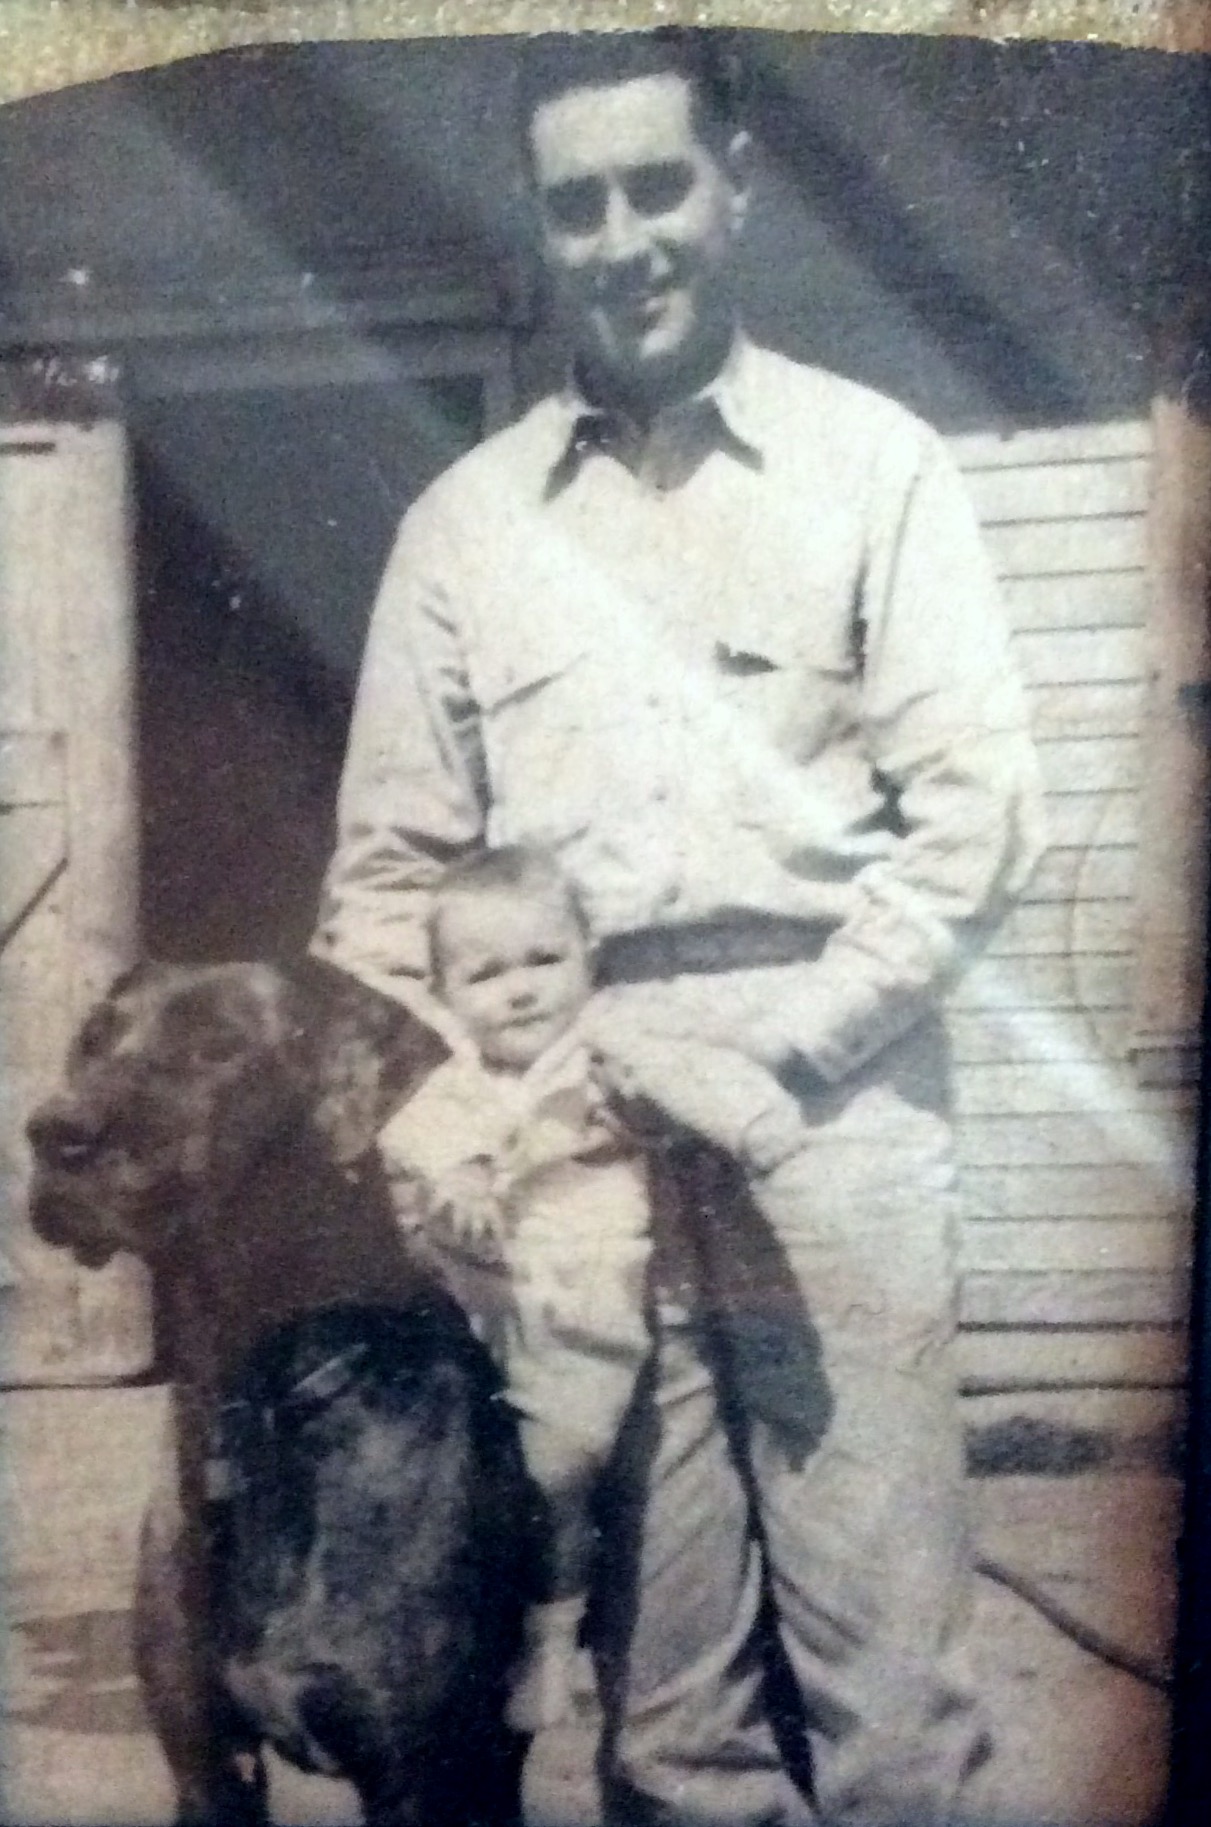 My Dad and I on Marine Base, Camp Pendleton 1946 and camp mascot